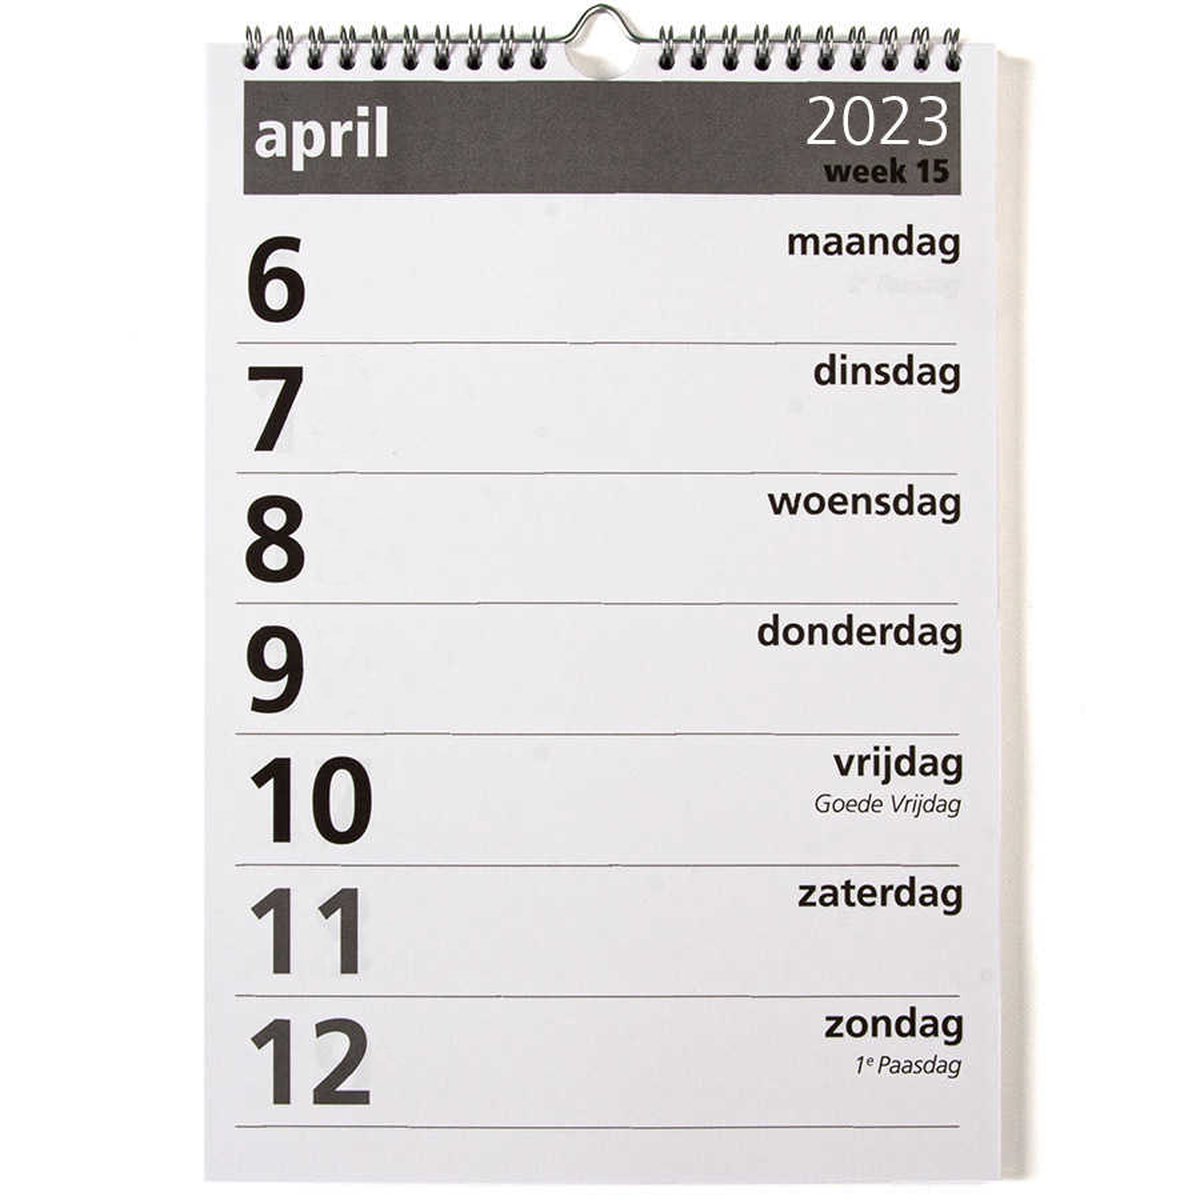 Castelli kalender H45 2023 - 1 week A5 kolom - grote cijferskalender - 1 week per pagina - liggend - 21 x 29.7 cm - Zwart